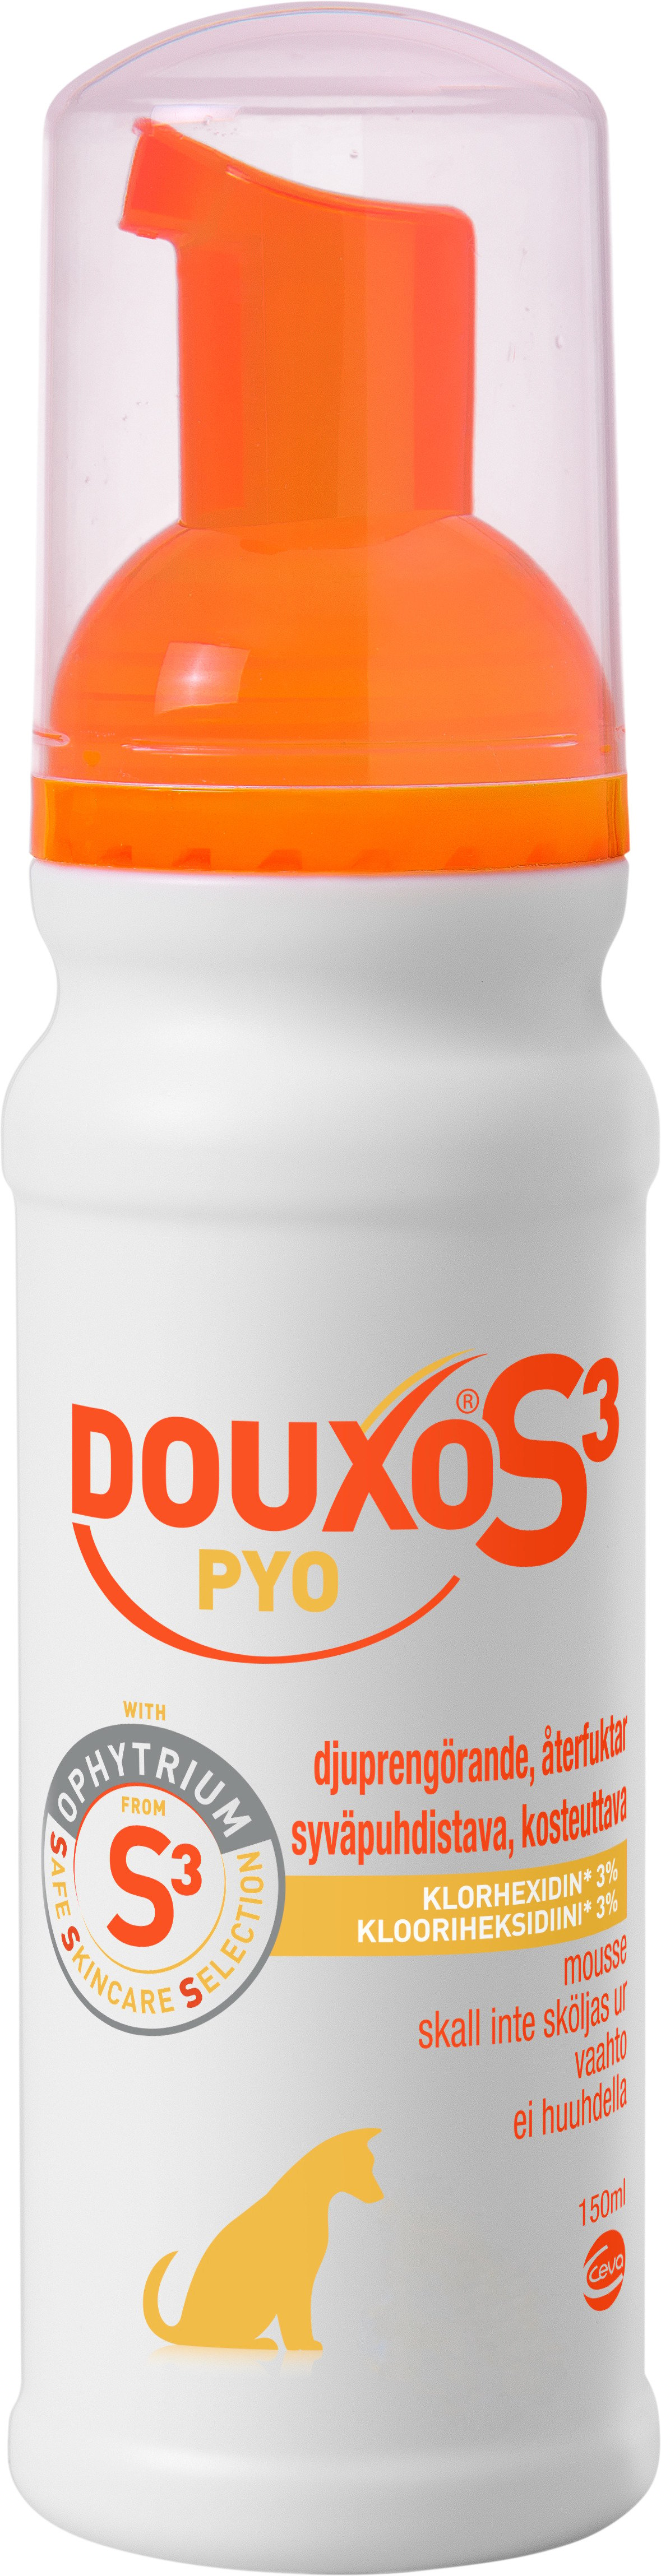 Douxo S3 Pyo Mousse 150 ml